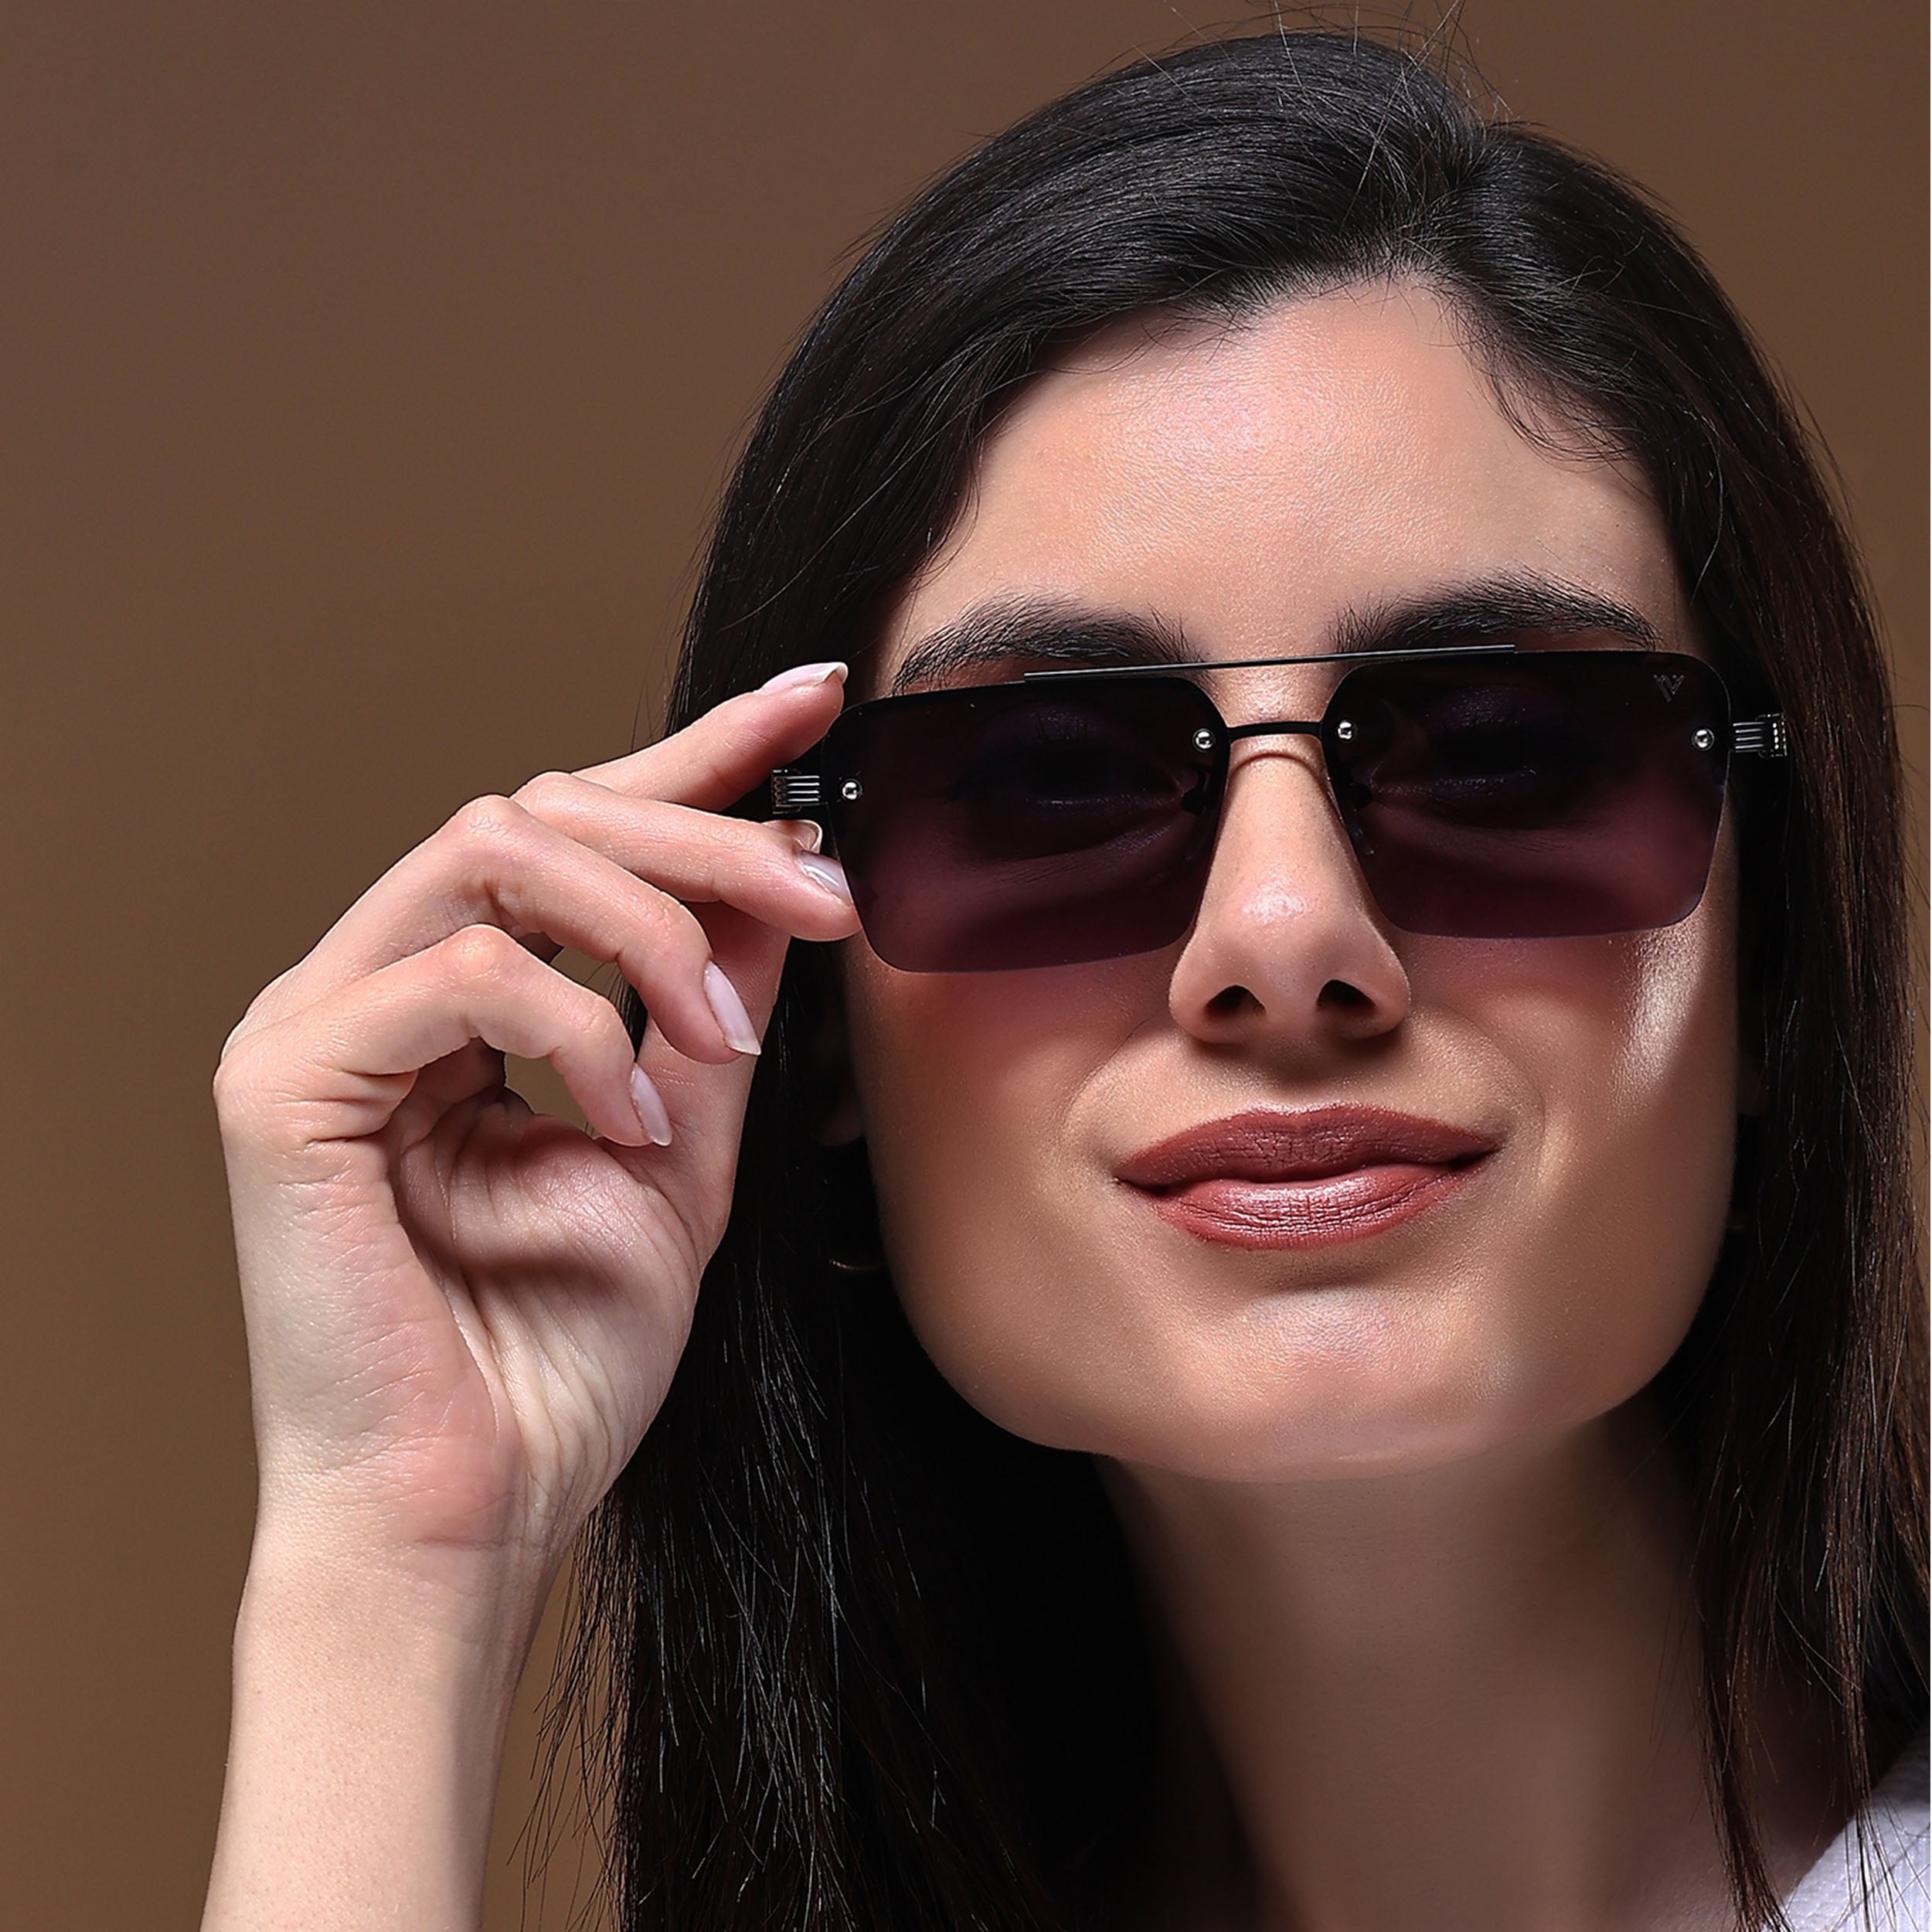 Voyage Purple Rectangle Sunglasses for Men & Women - MG4501